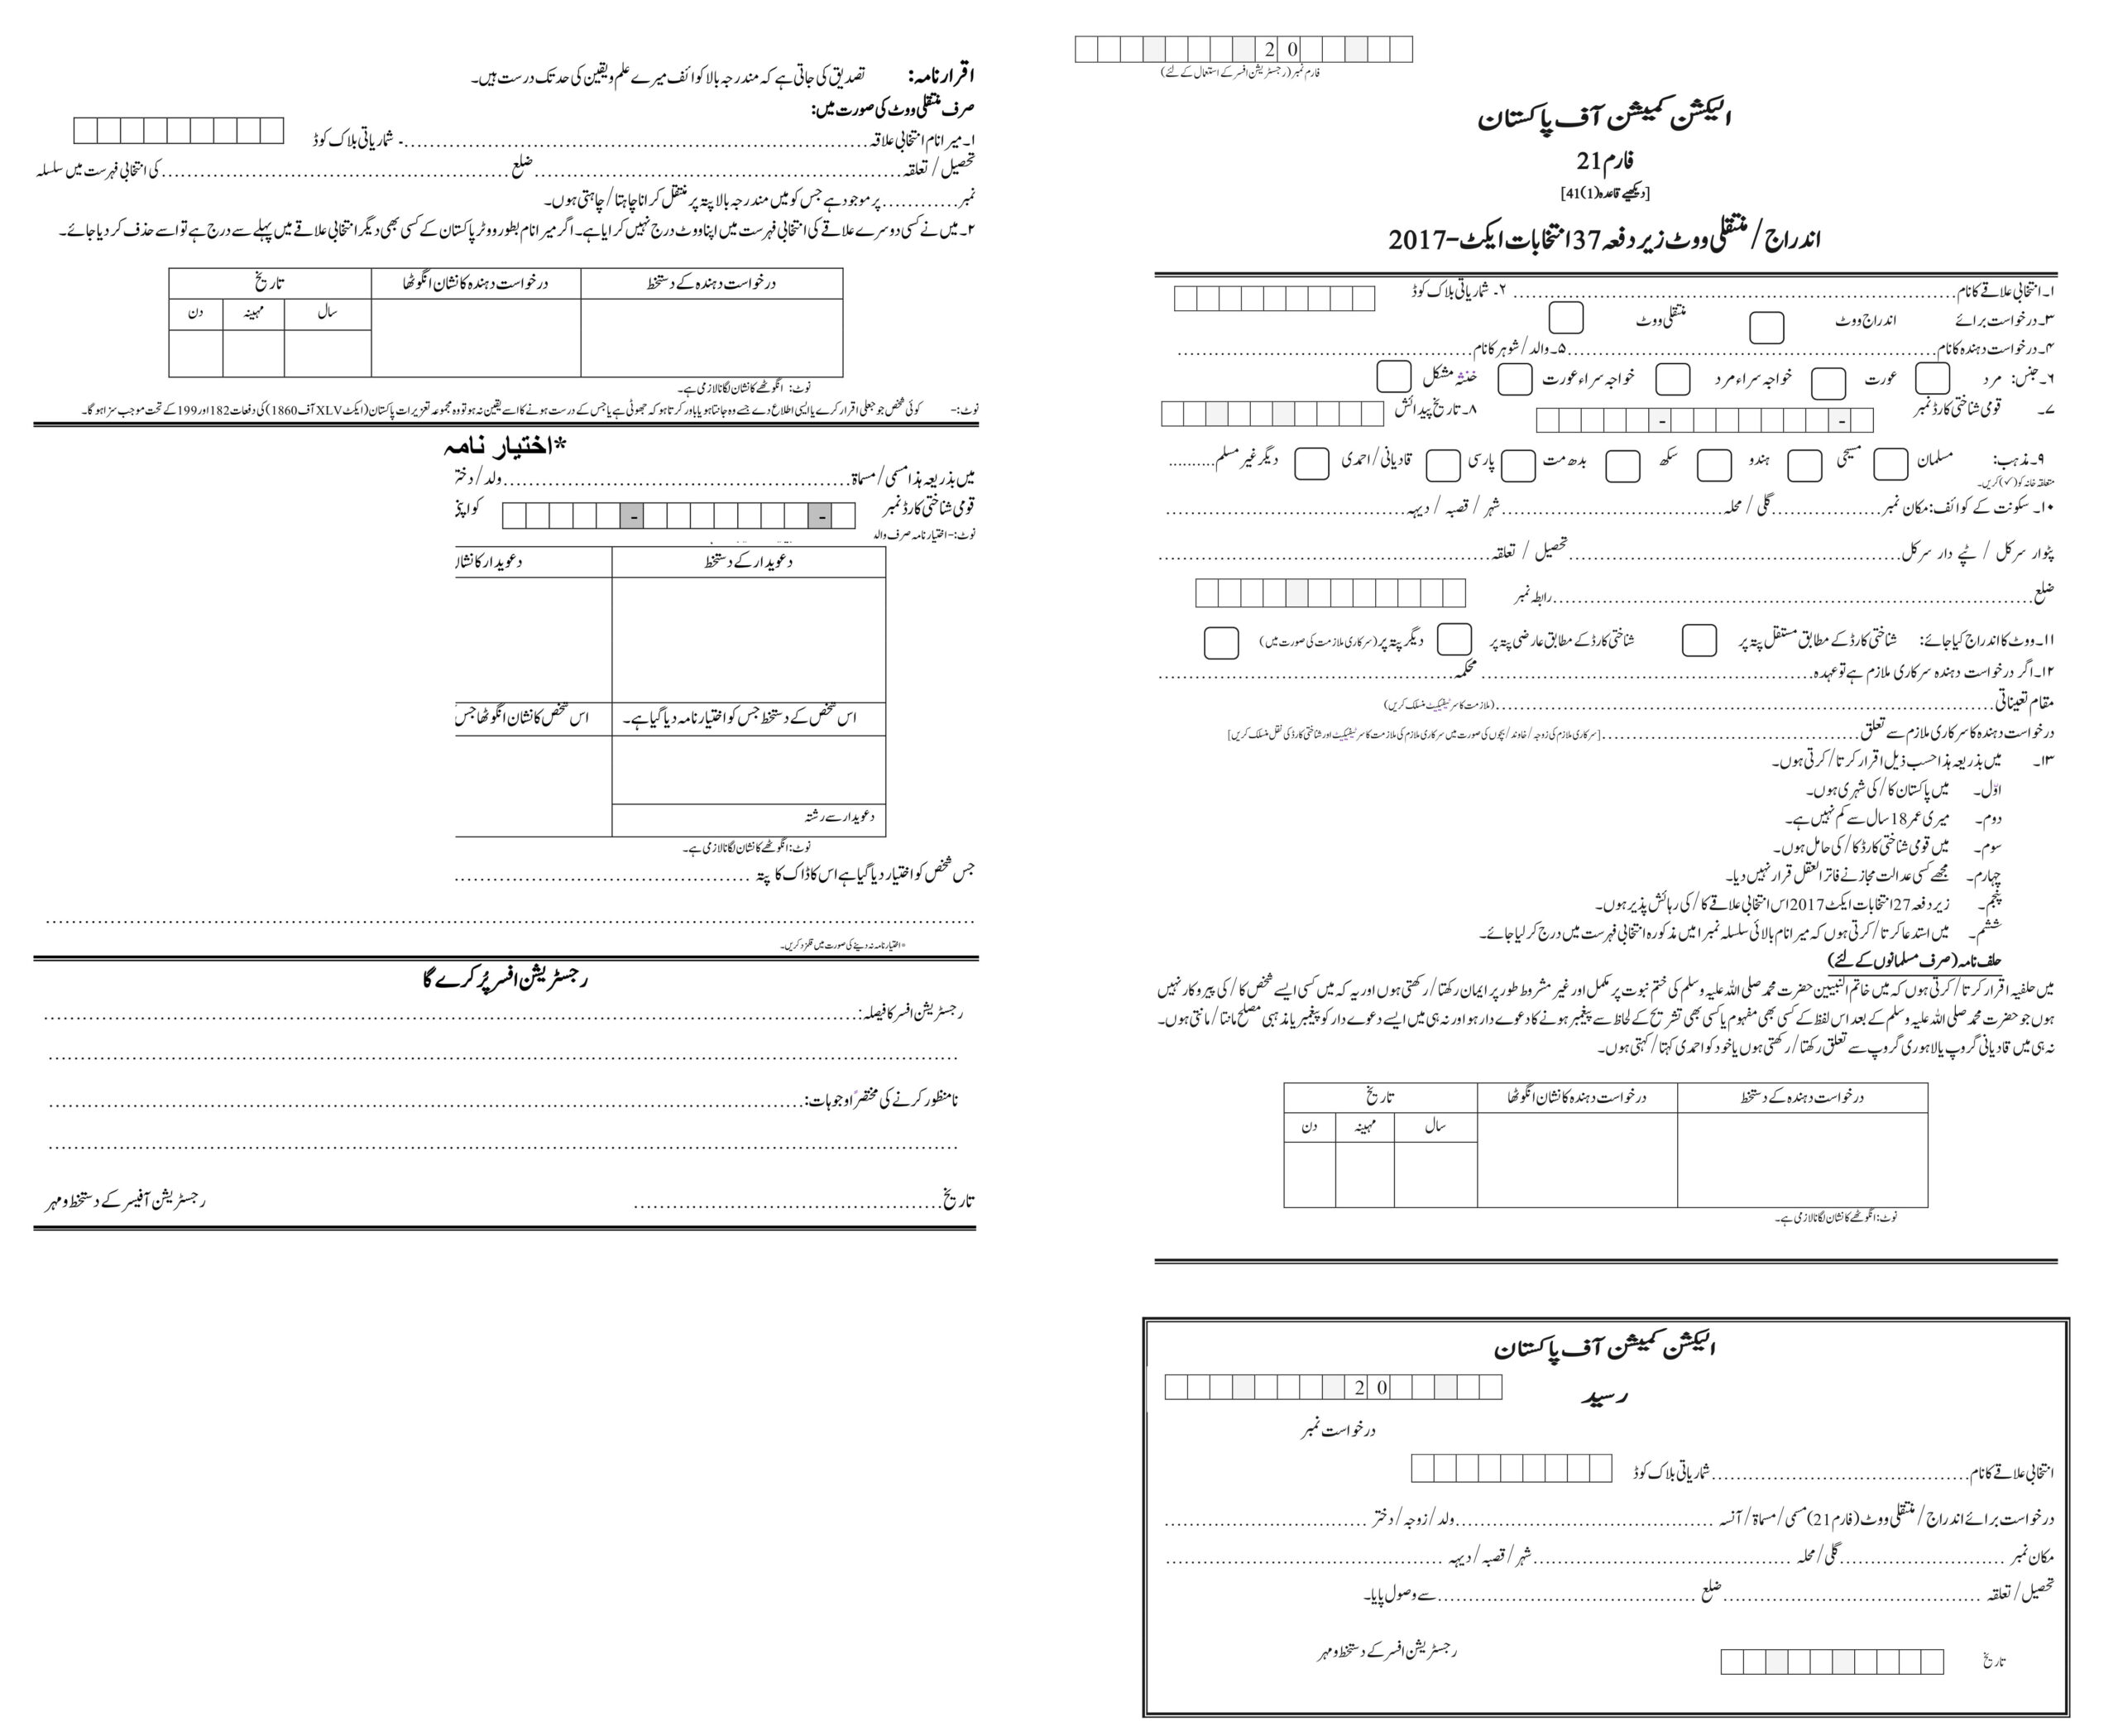 voter registration form - ECP - ahgroup-pk